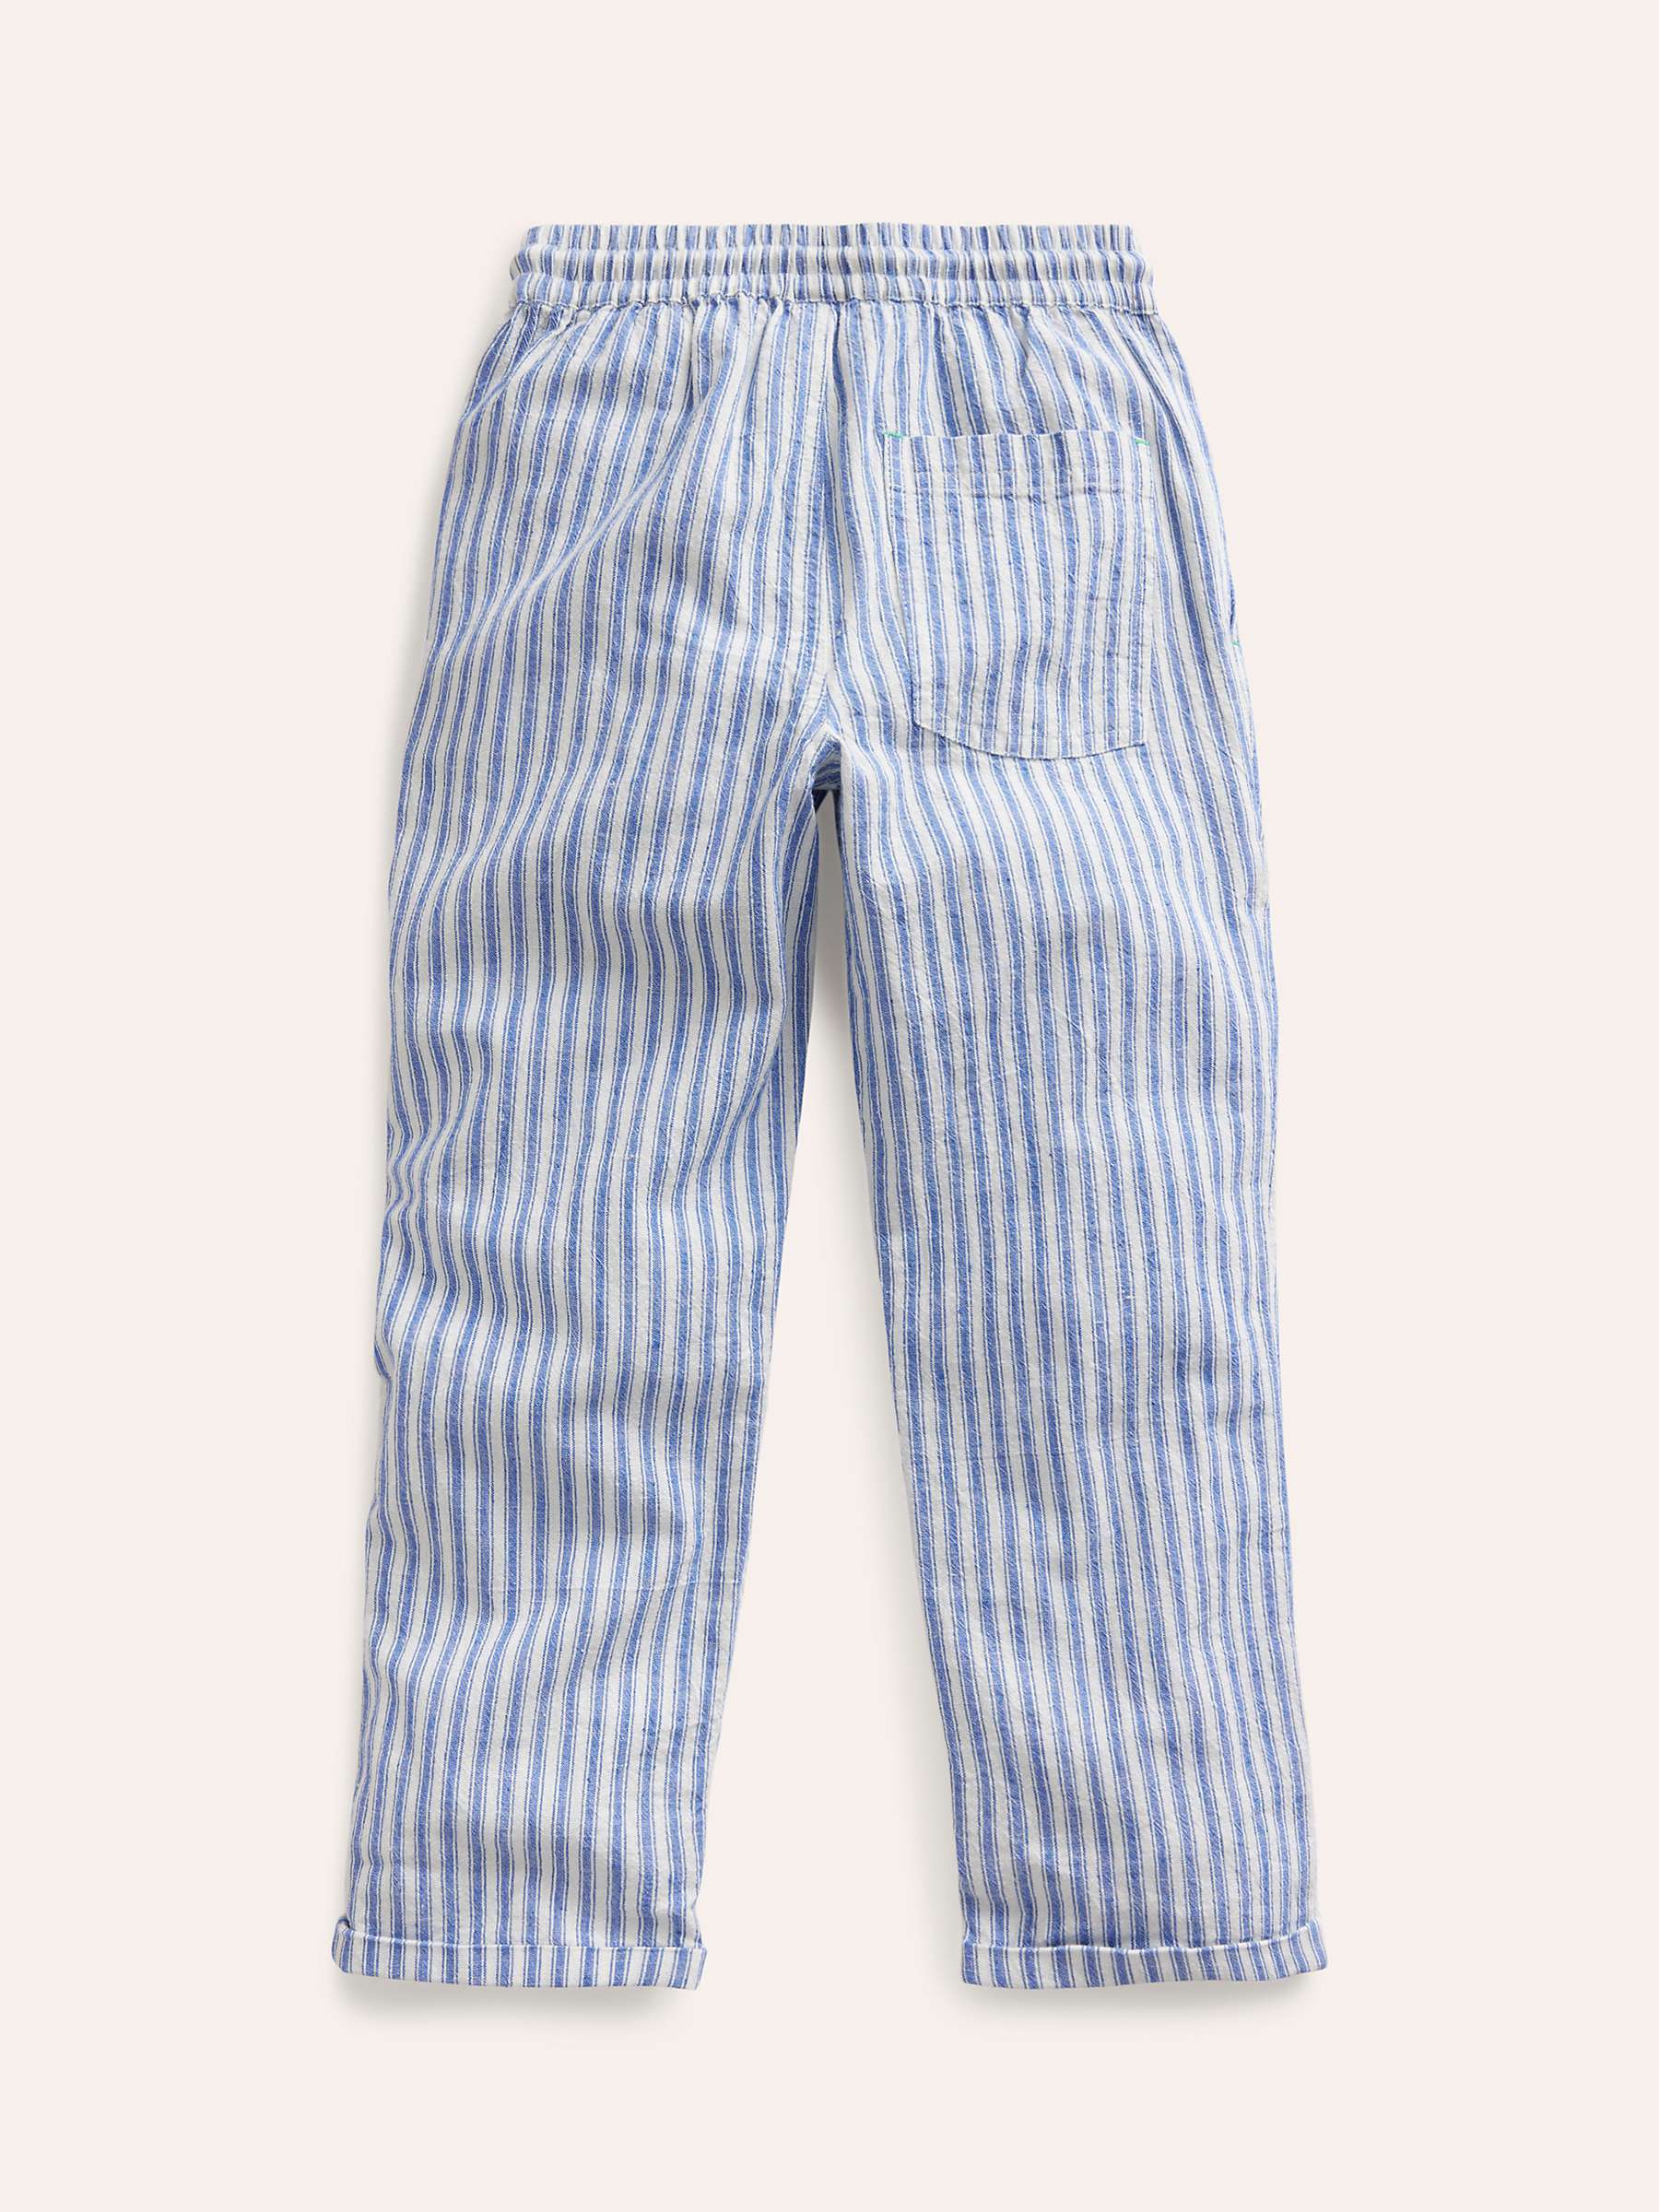 Buy Mini Boden Kids' Summer Stripe Pull On Trousers Online at johnlewis.com